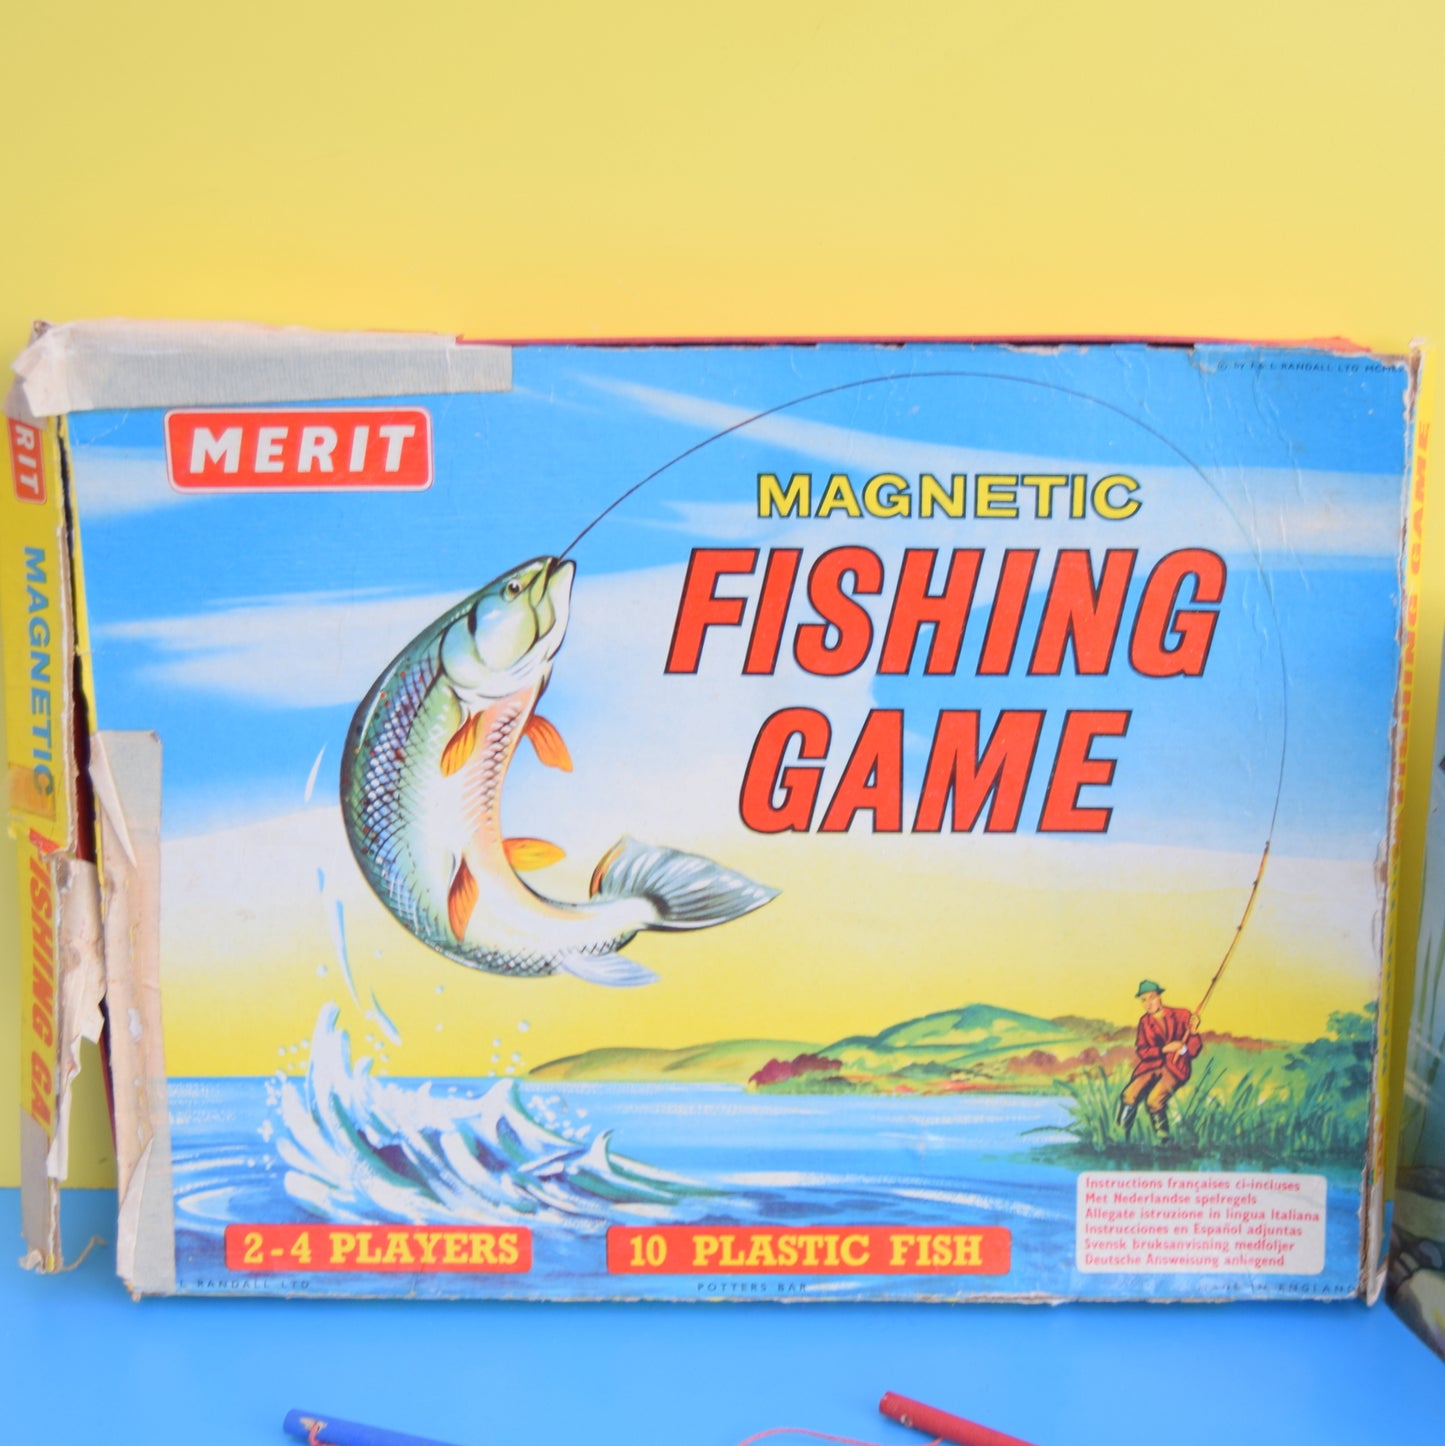 Vintage 1960s Magnetic Fishing Game - Merit - Plastic Fish